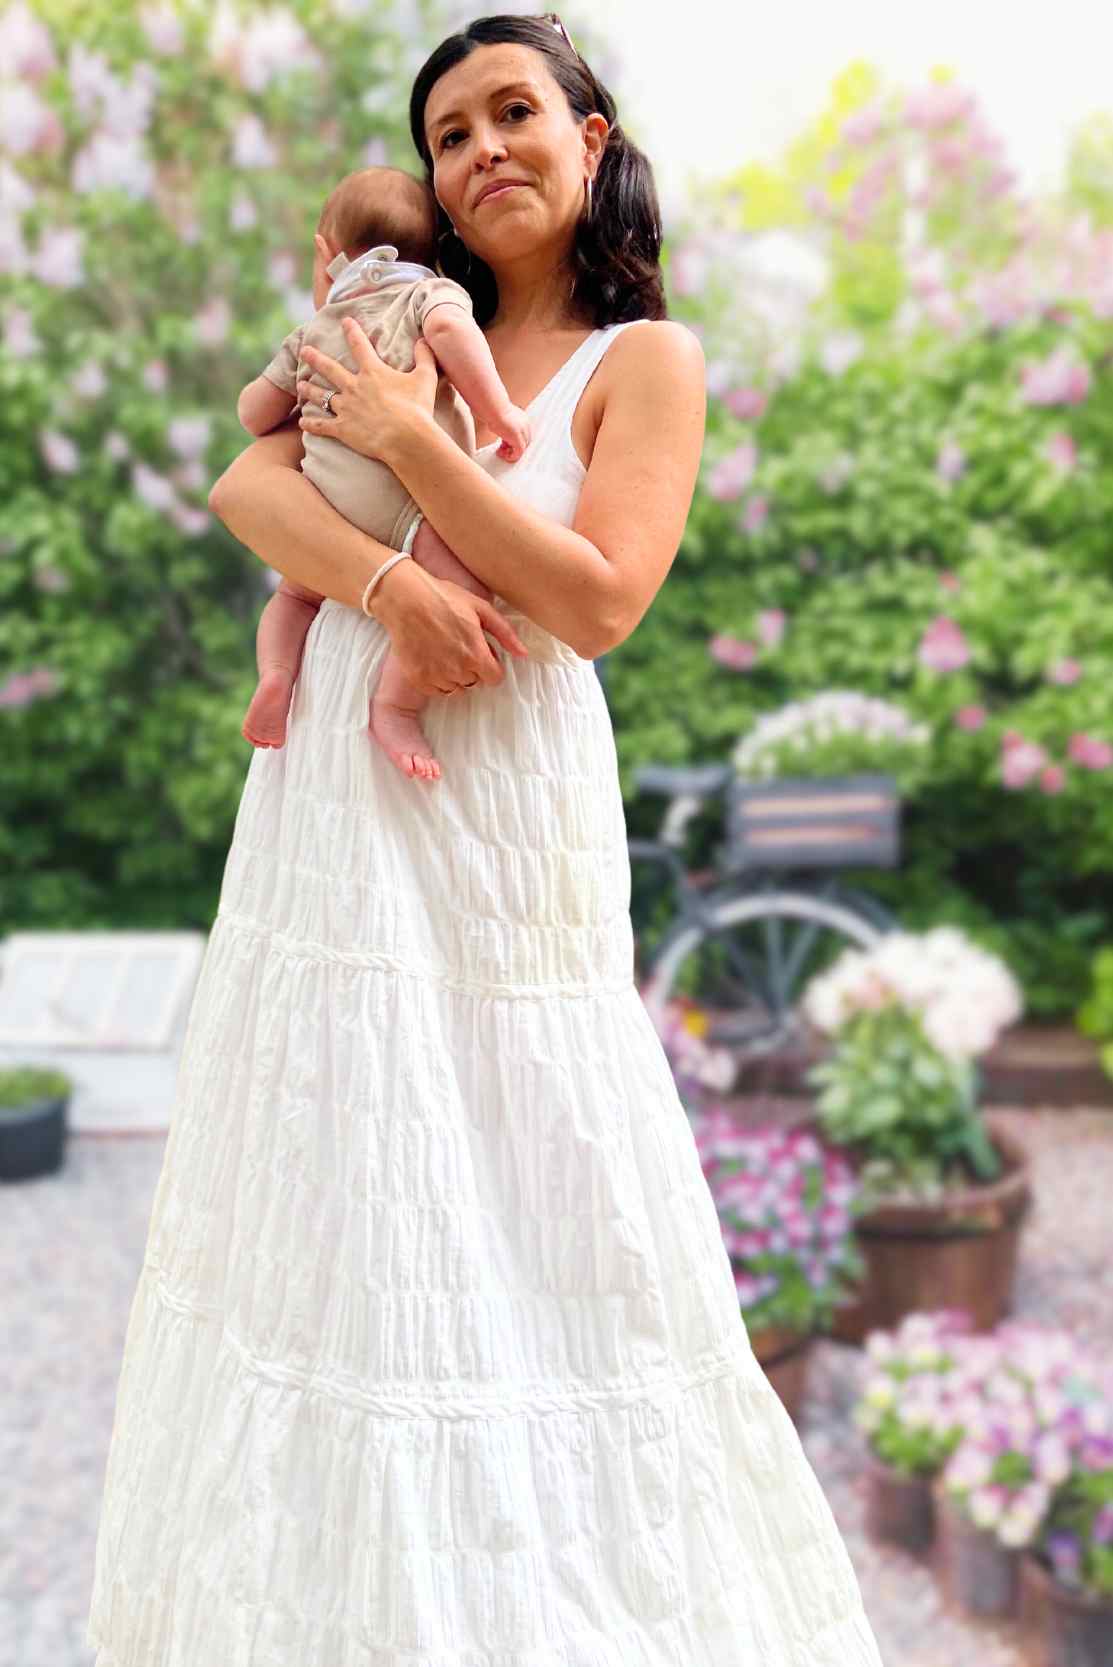 Baby Bump Beauty Dress - Cotton Maternity dress with nursing zips